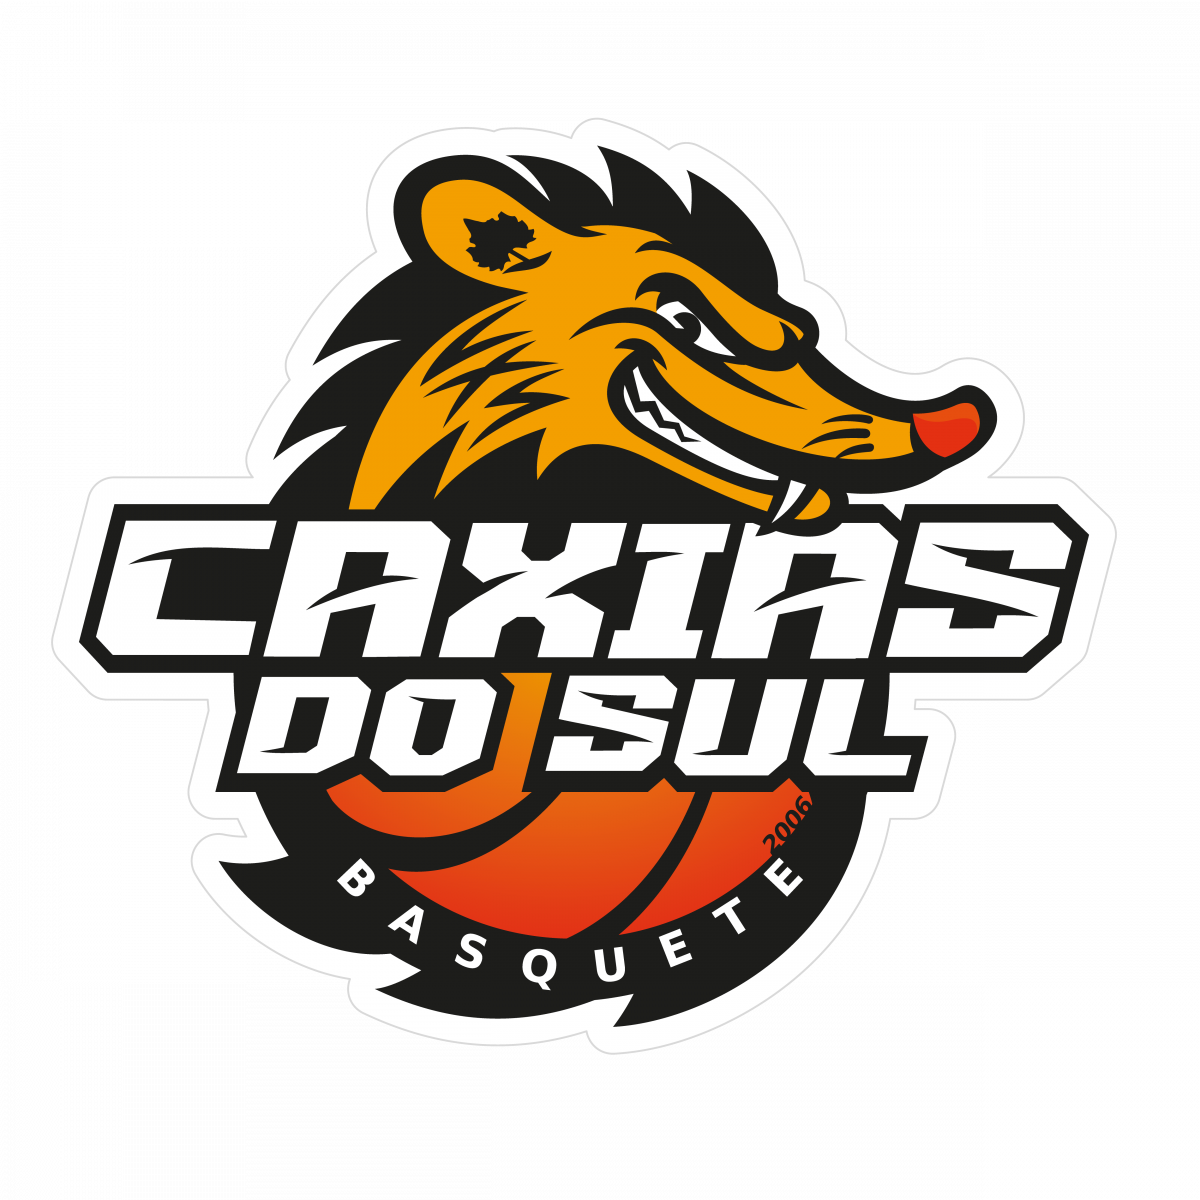 Caxias do Sul – Liga Nacional de Basquete